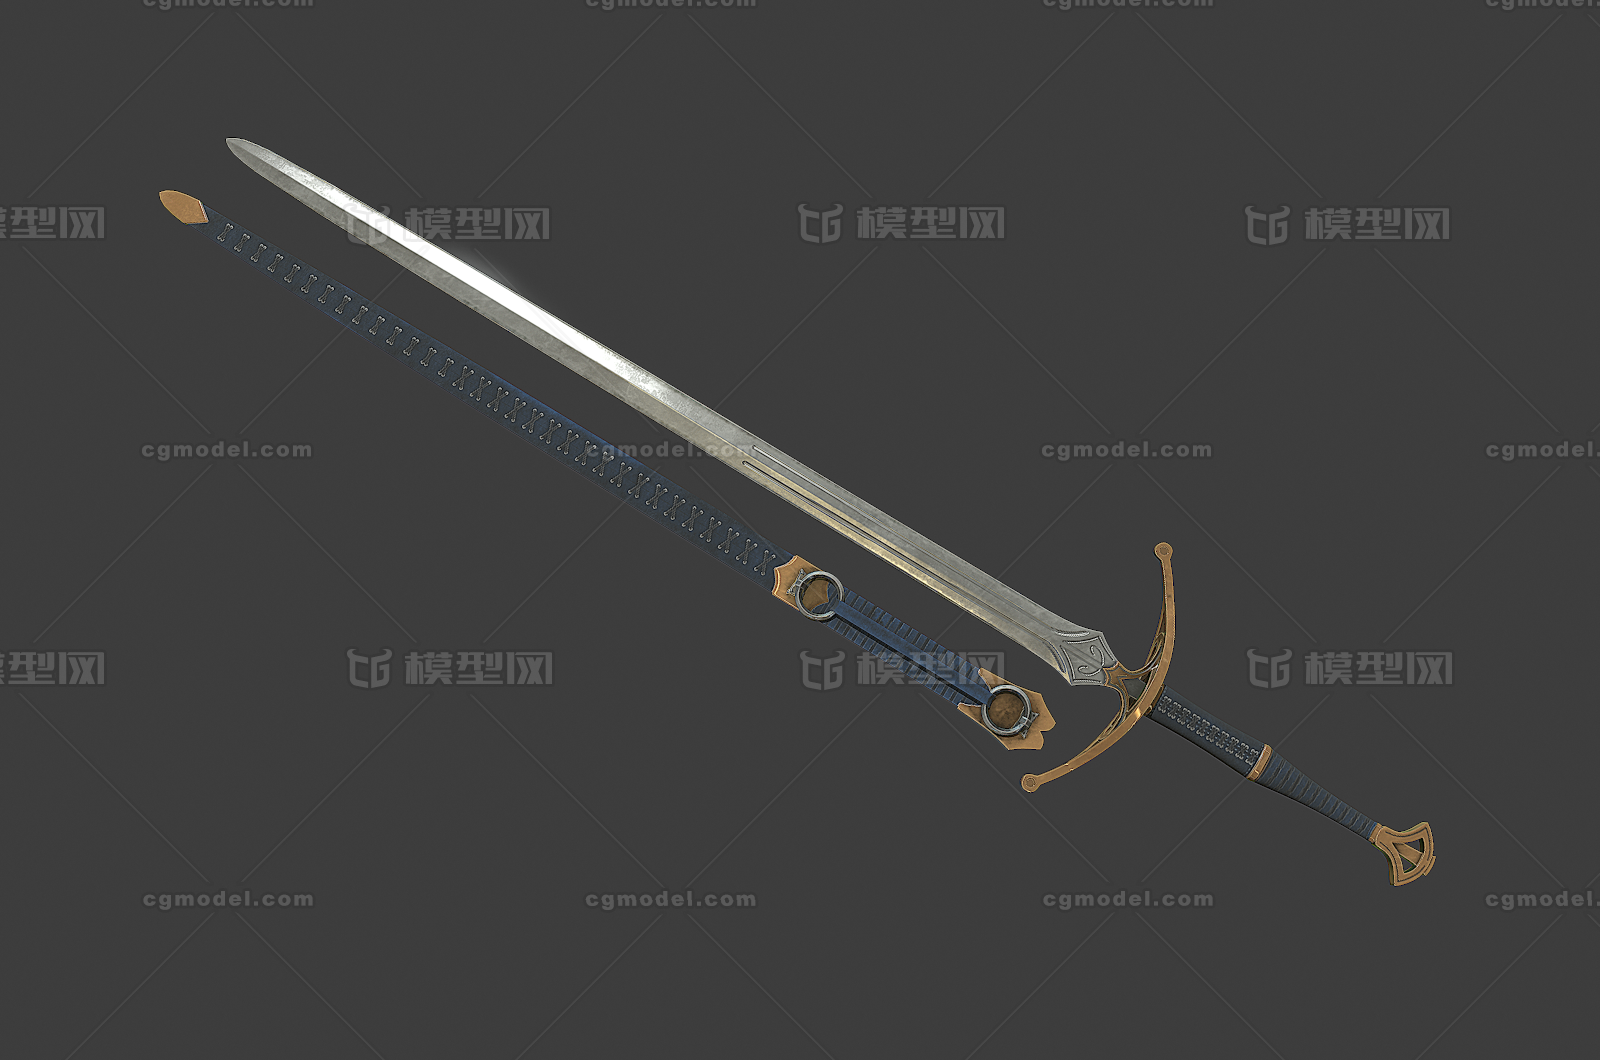 194 pbr次世代 长剑 击剑 佩剑 剑士 剑客 大剑 宝剑 刀剑 西洋剑